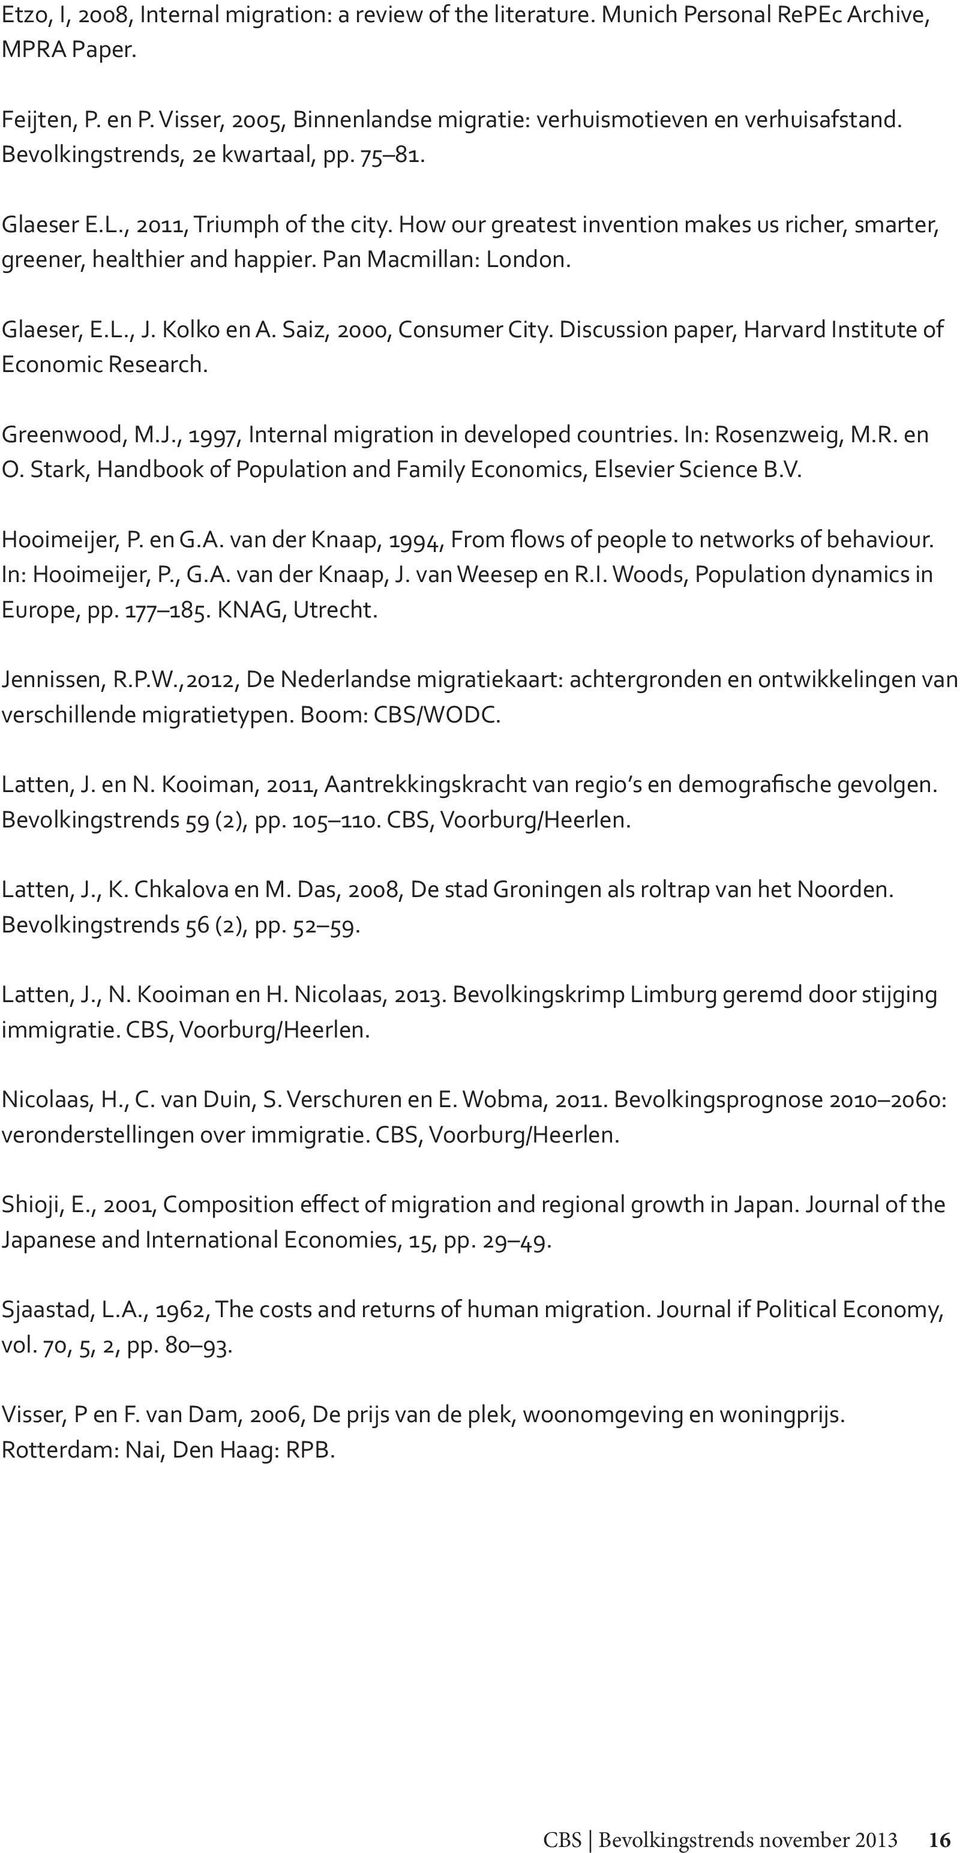 Glaeser, E.L., J. Kolko en A. Saiz, 2000, Consumer City. Discussion paper, Harvard Institute of Economic Research. Greenwood, M.J., 1997, Internal migration in developed countries. In: Rosenzweig, M.